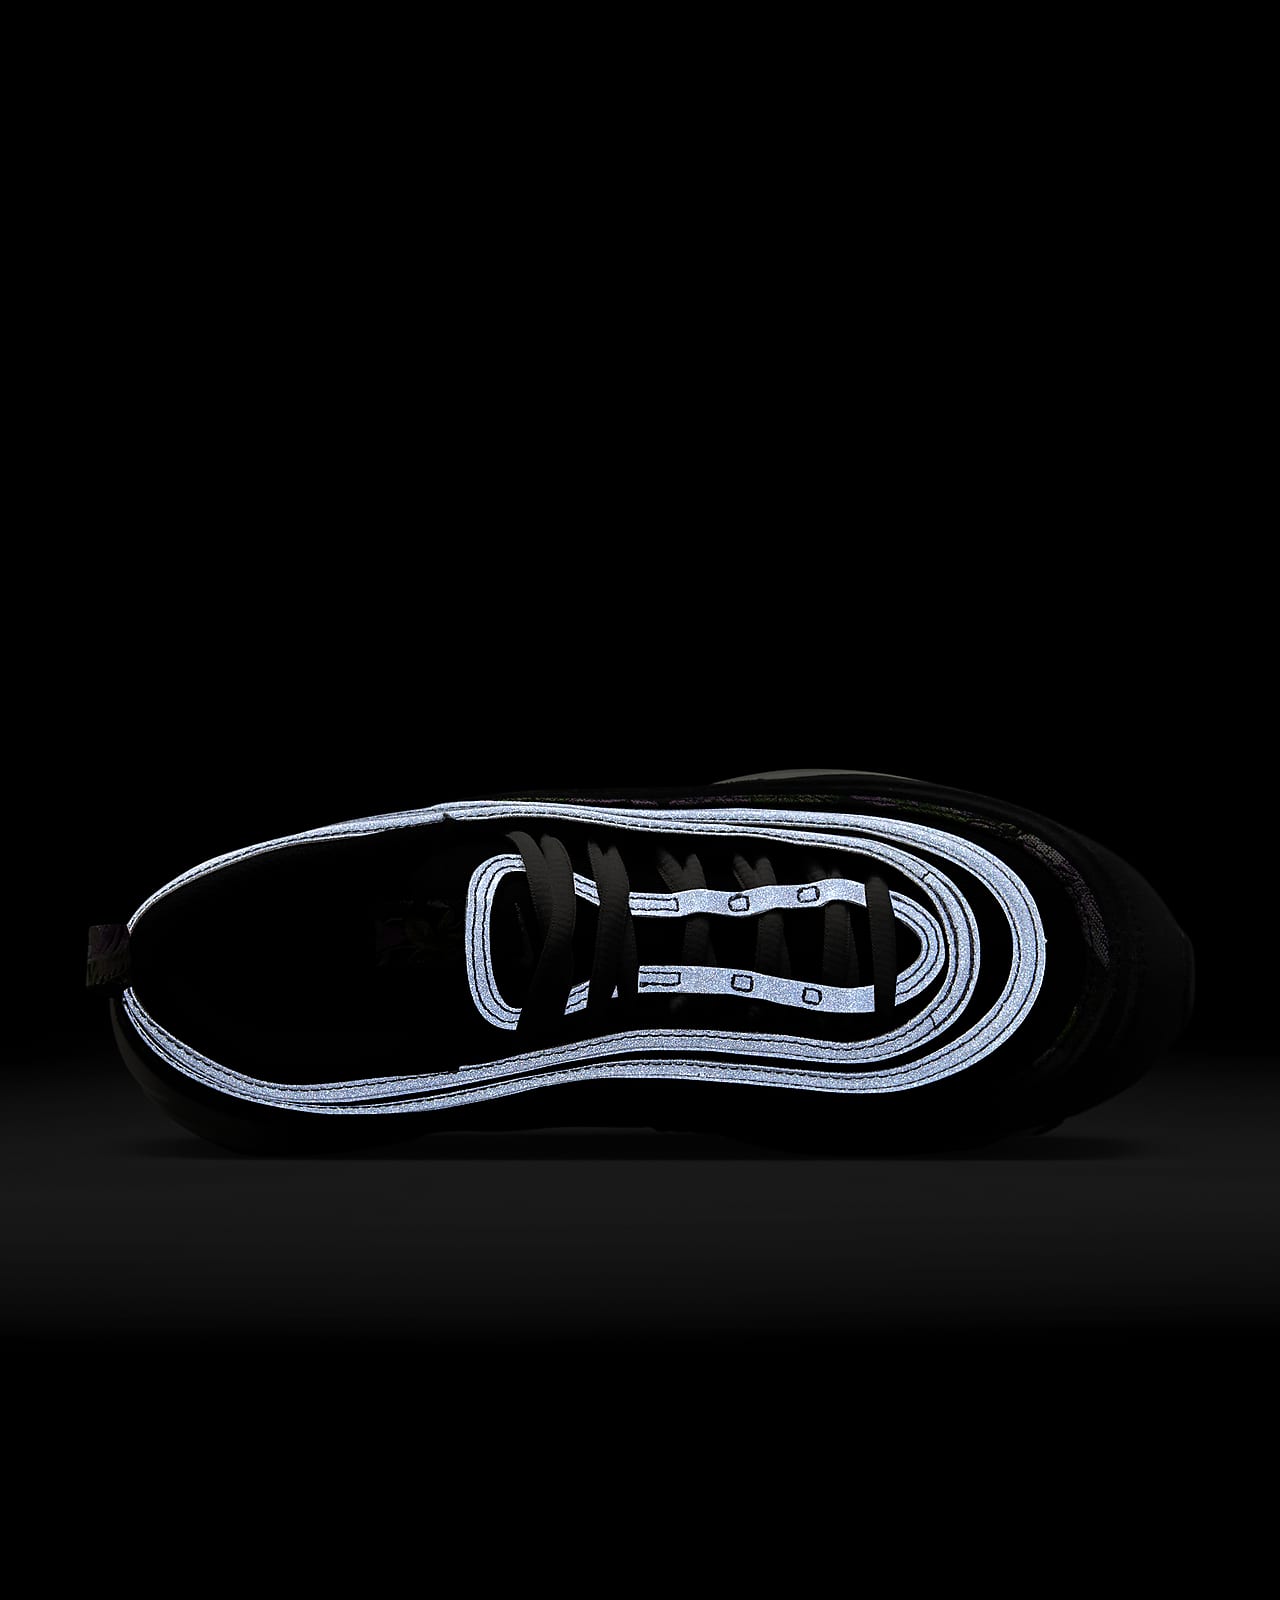 Nike Air Max 97 (White/Black/Summit White/Lemon Wash) 9.5